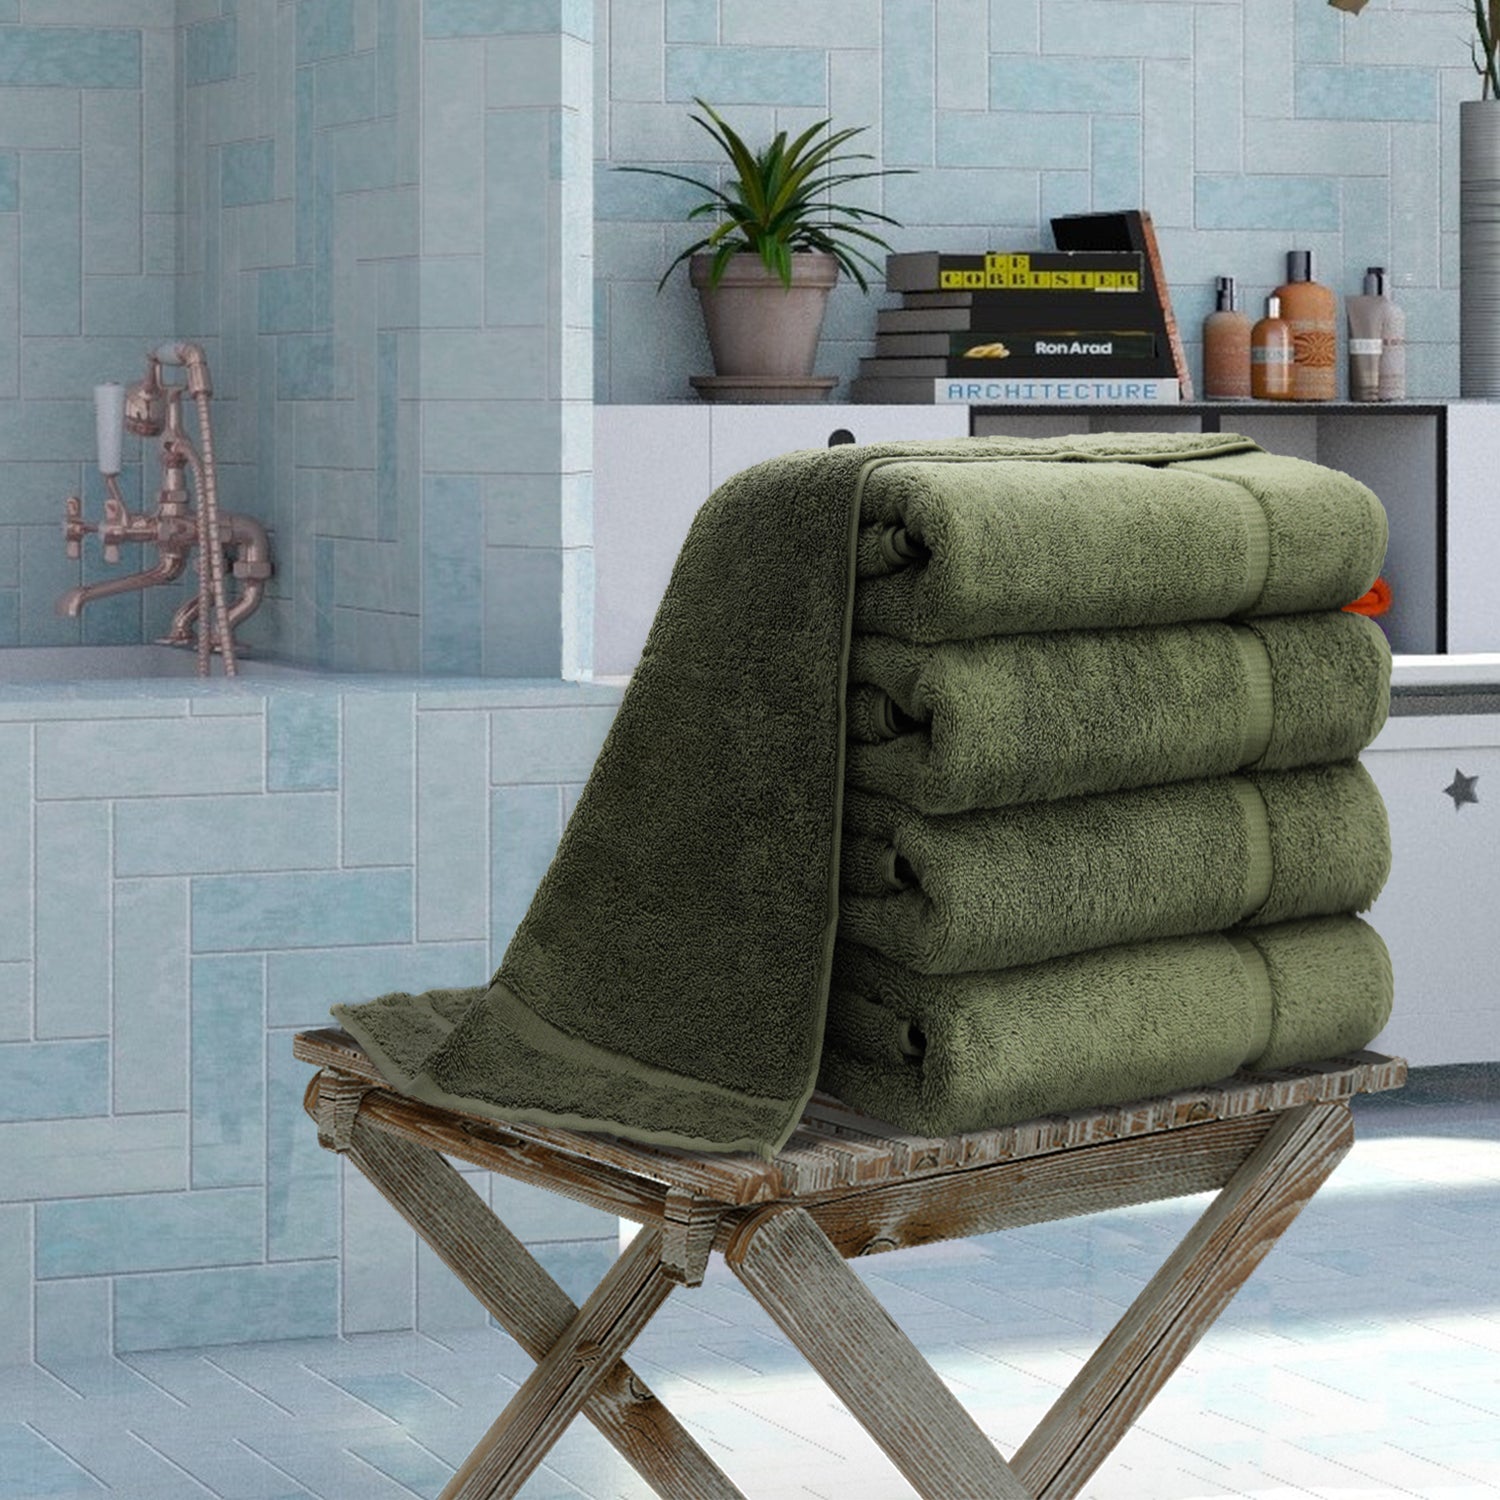 Grandeur Luxury Bath Towel Set of Two 30 x 58 Wasabi Green - Discontinued  Item